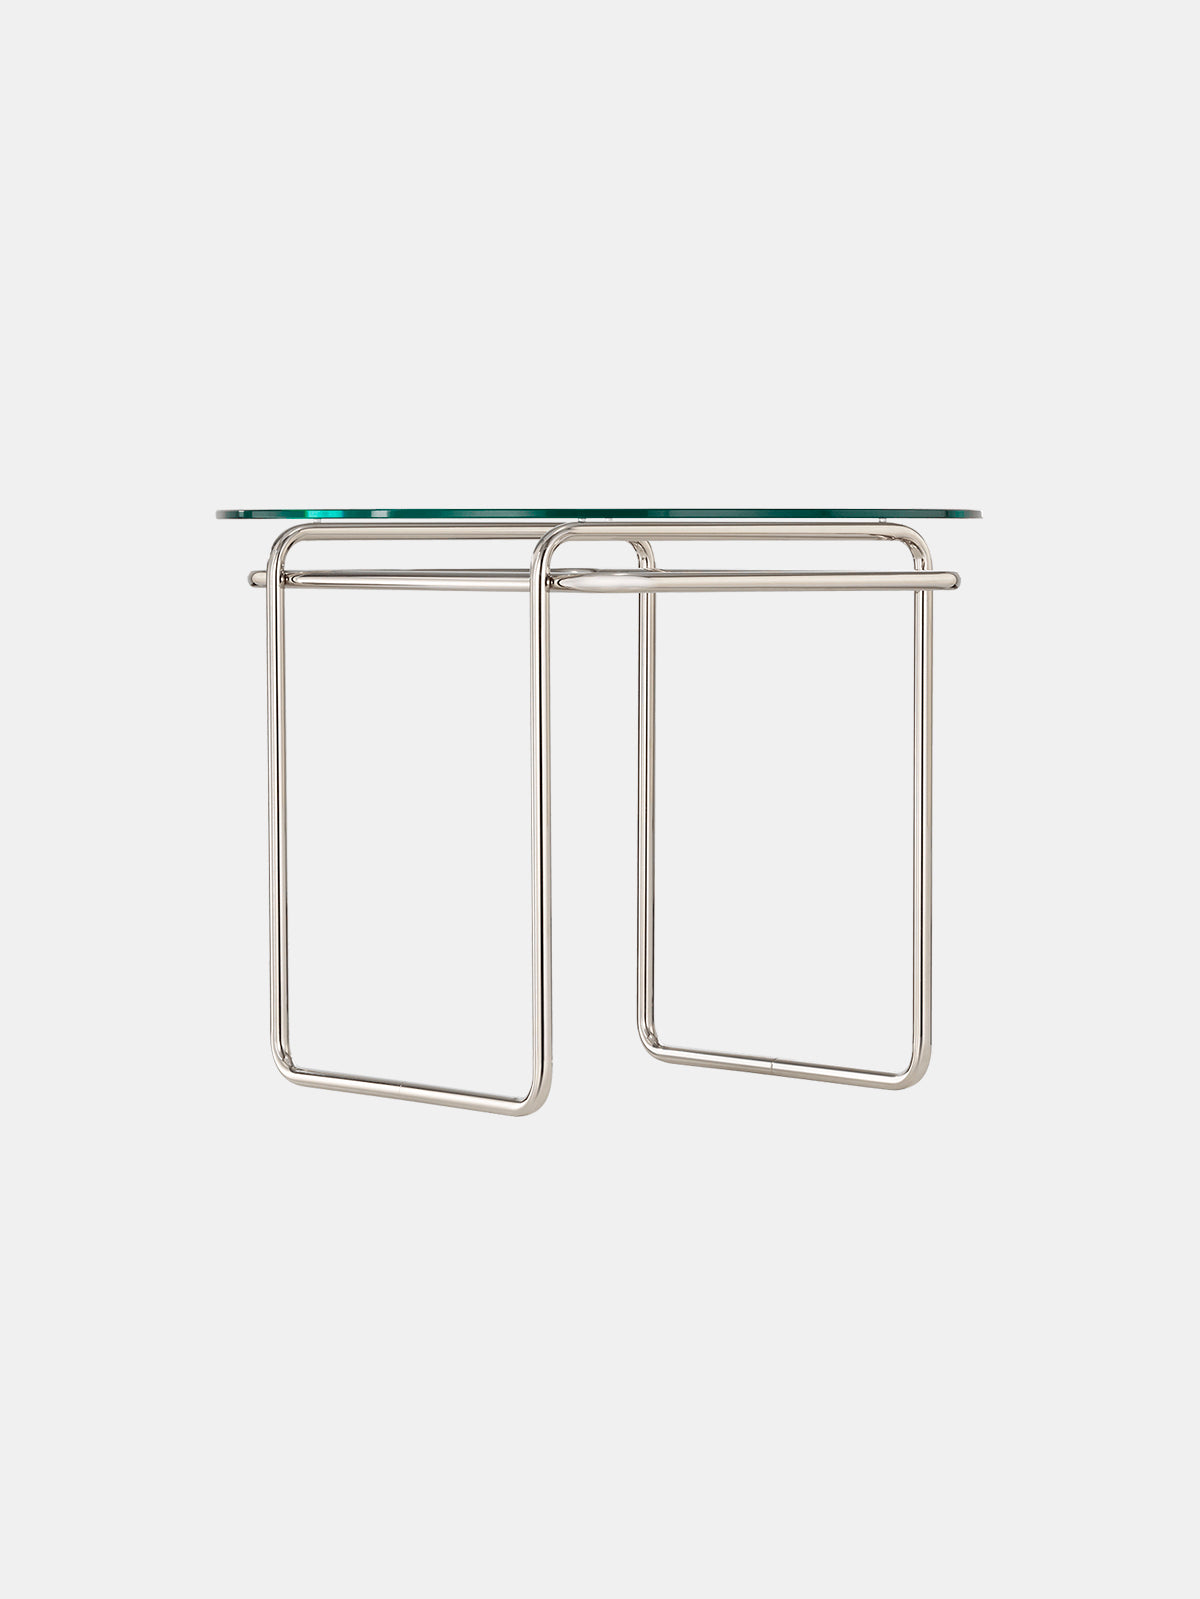 K40 Table designed by Marcel Breuer